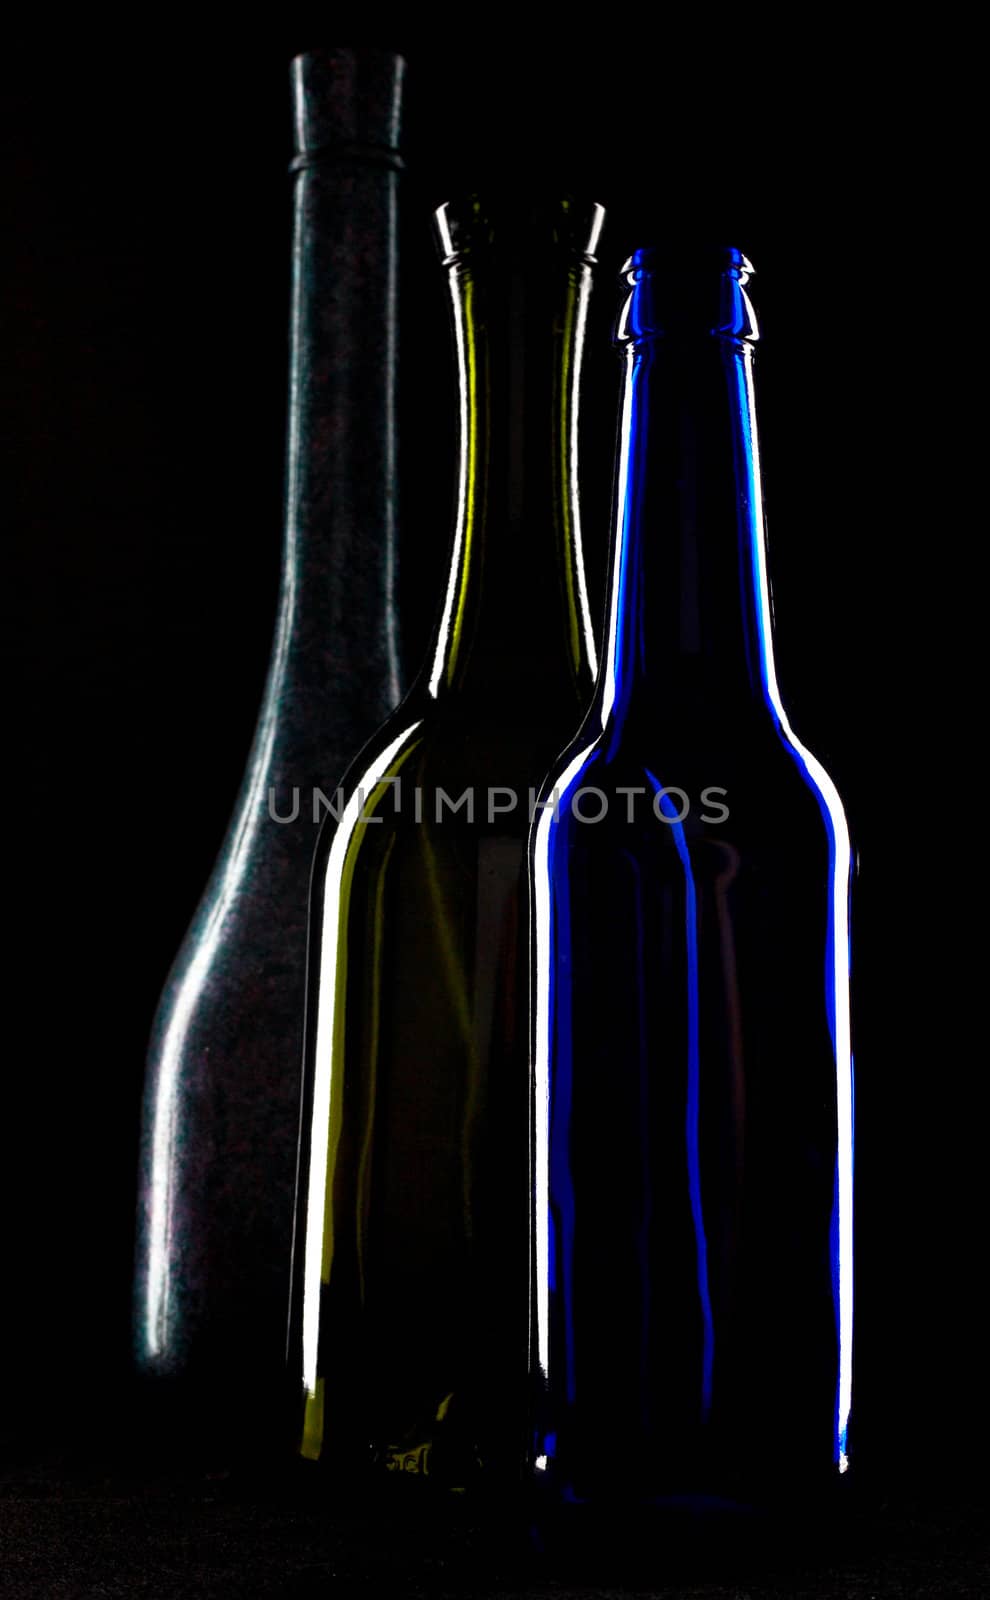 Silhouettes of bottles of wine by velkol